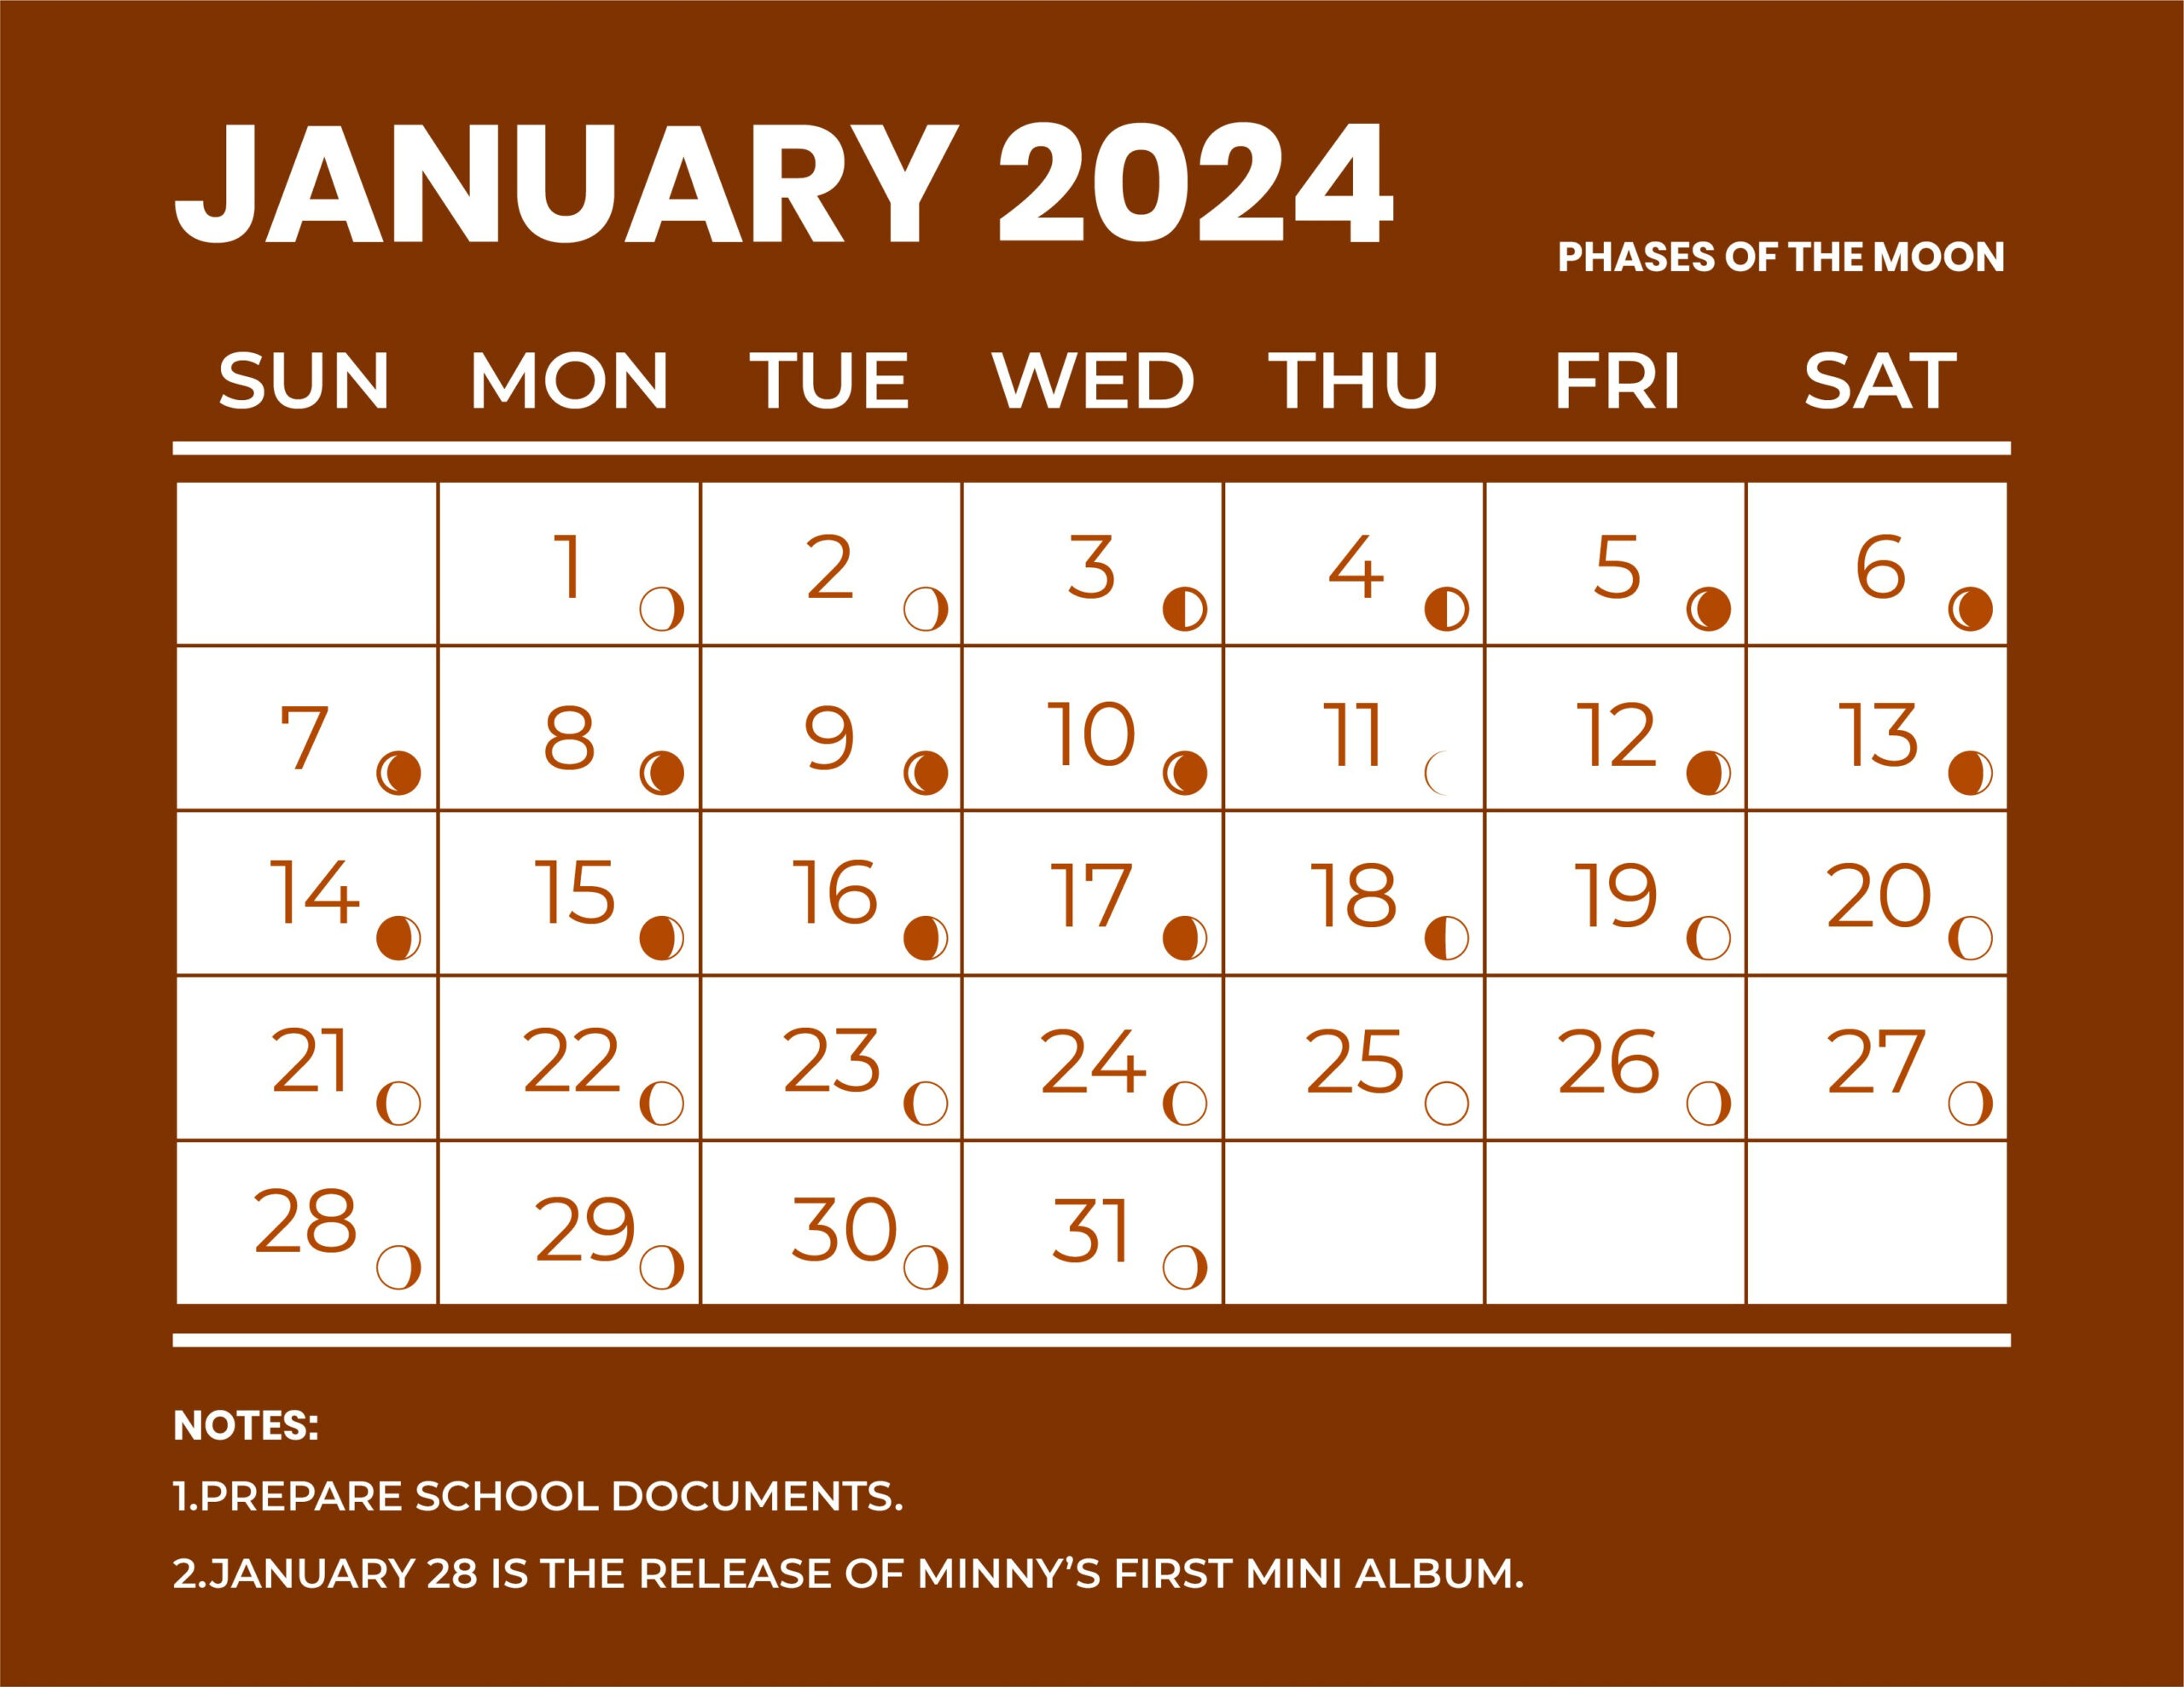 January 2024 Calendar With Moon Phases - Word, Illustrator, Eps for Printable Moon Phase Calendar 2024